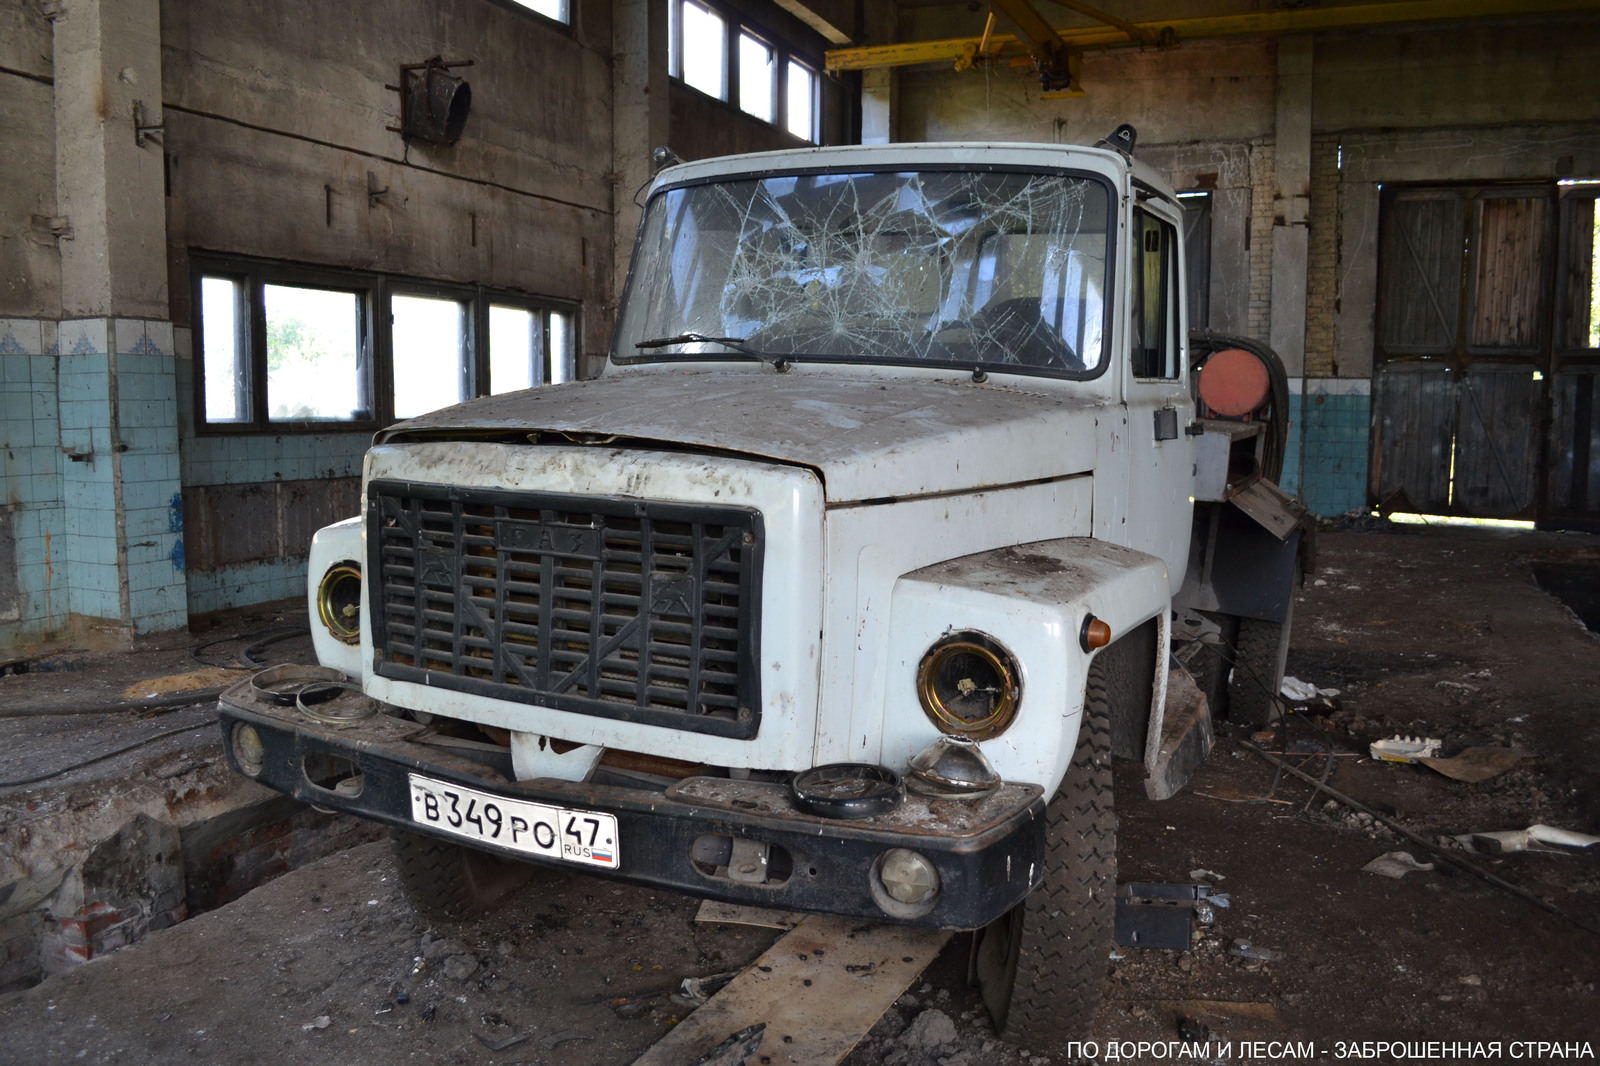 Abandoned poultry farm. - My, Urbanturism, Urbanphoto, Video, Abandoned, Longpost, Leningrad region